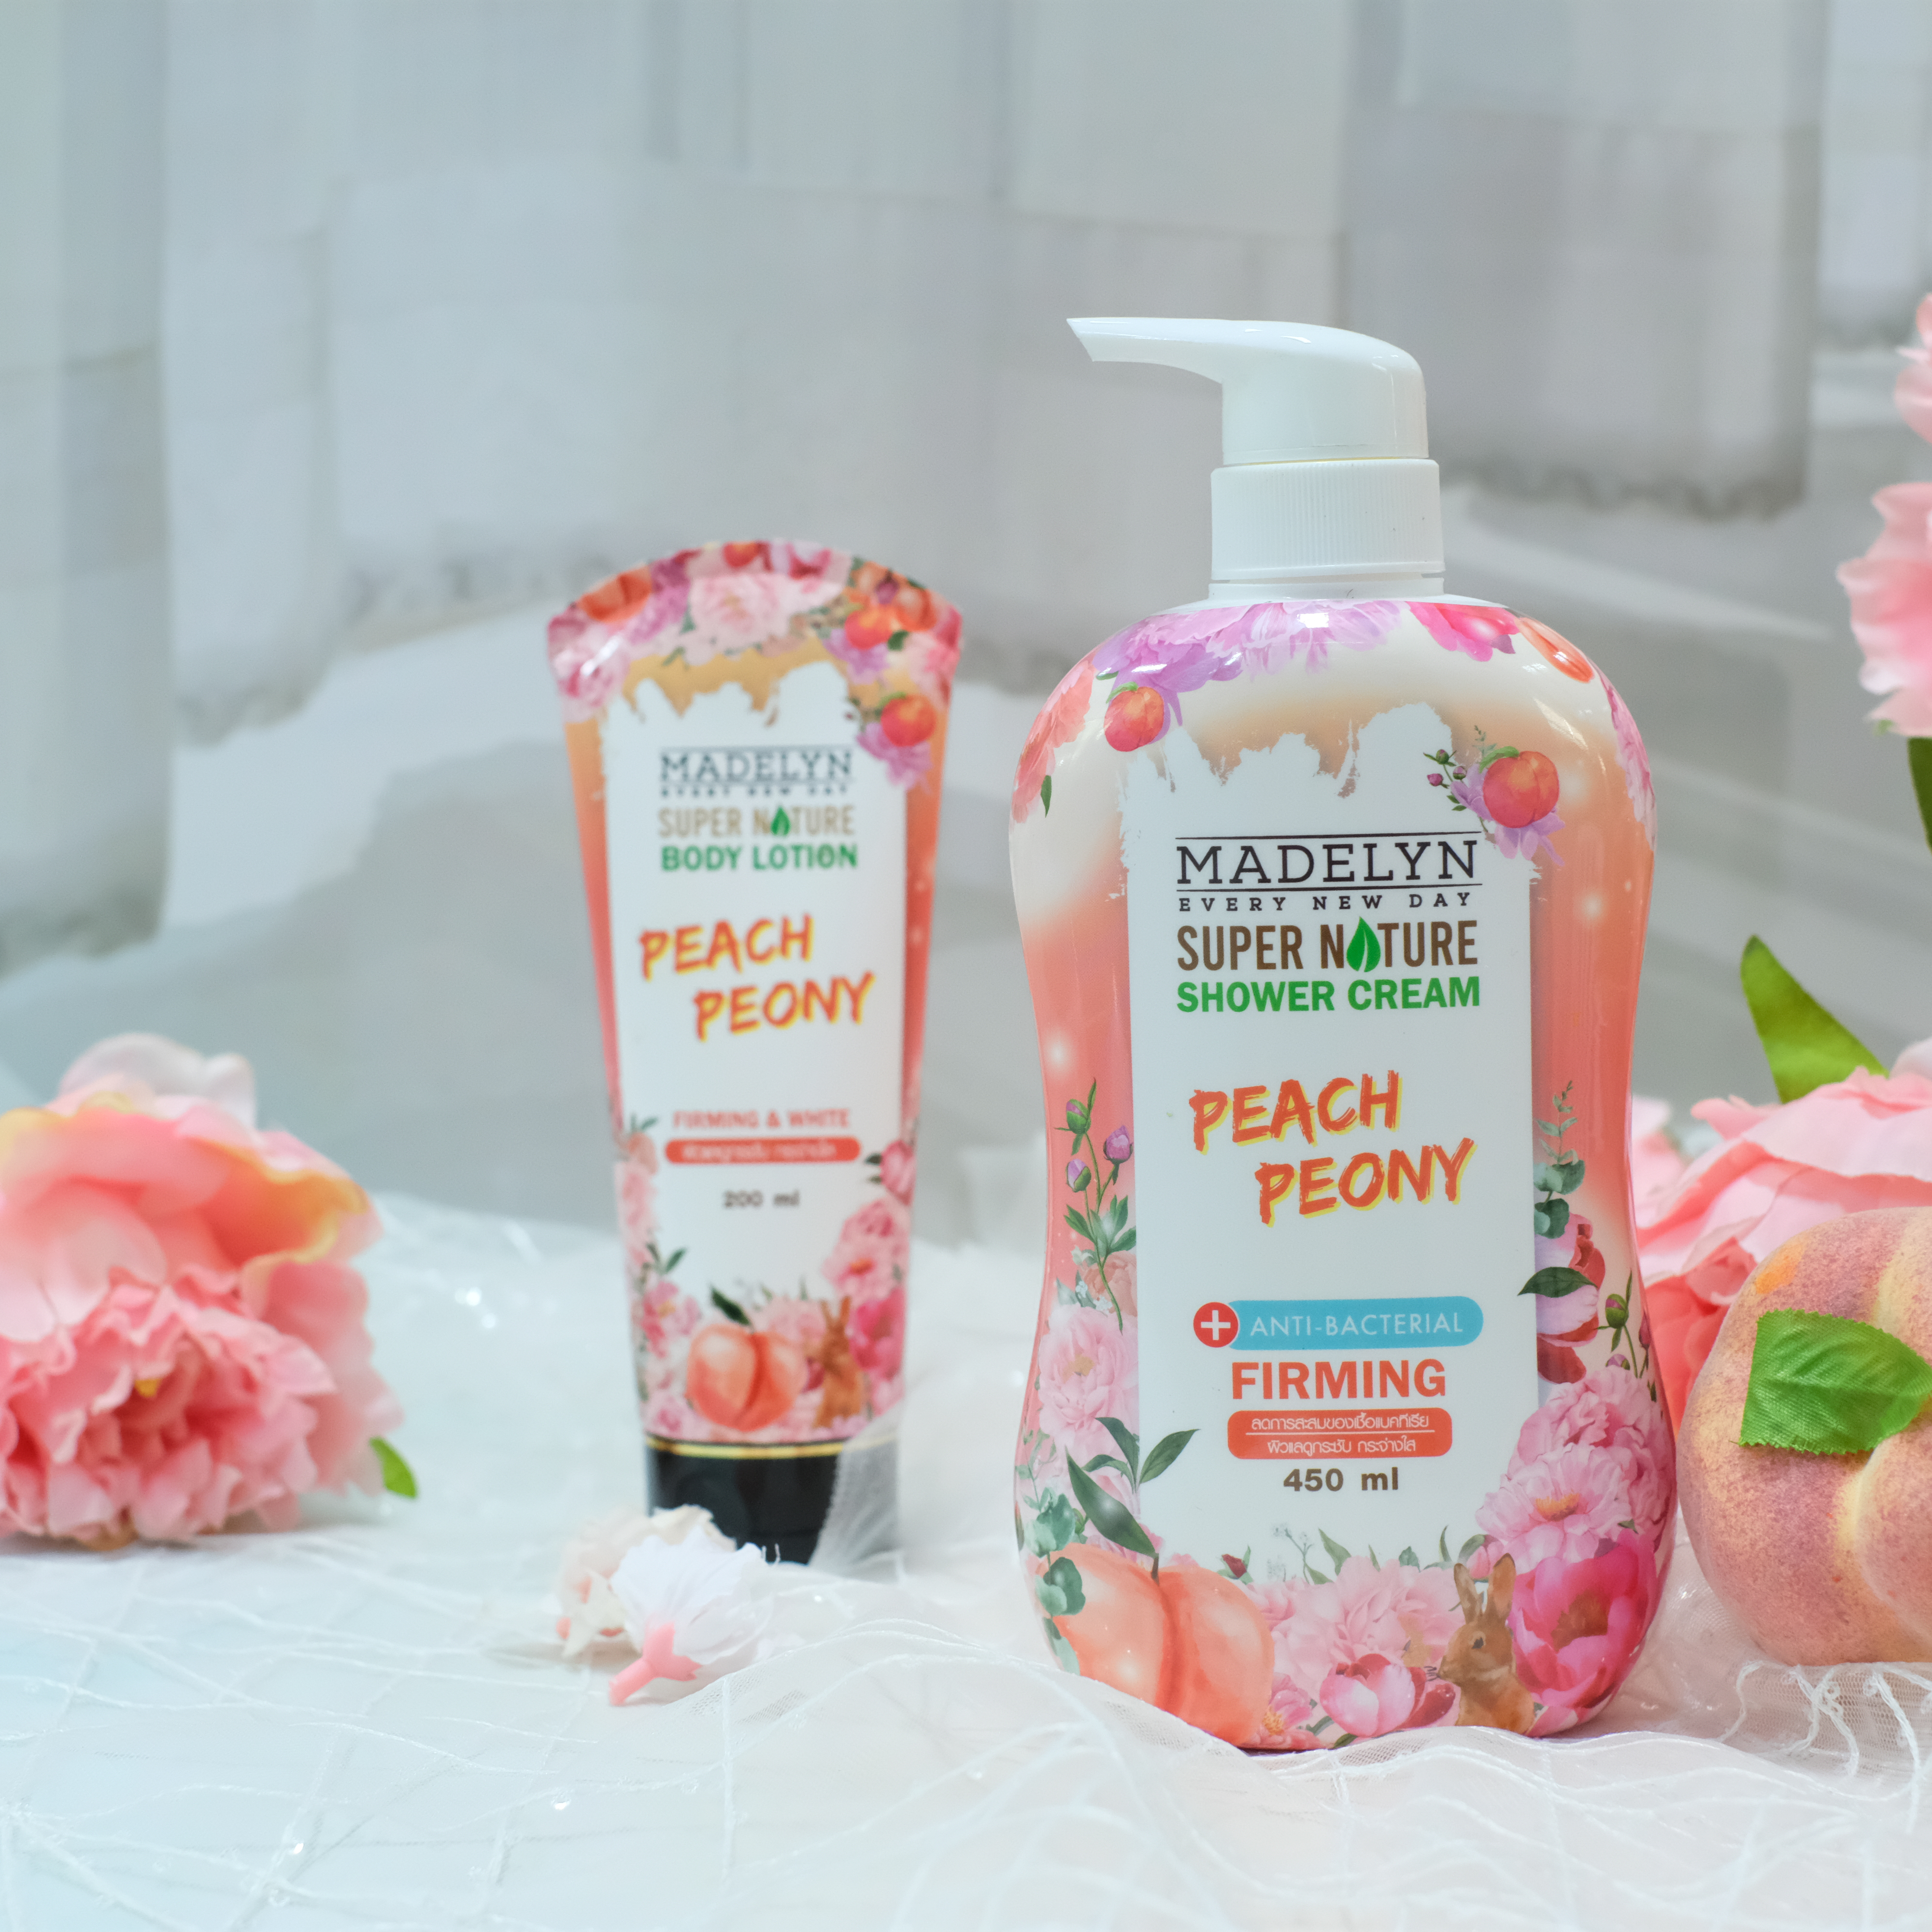 Madelyn Shower Cream Peach Peony 450 ml ครีมอาบน้ำสูตรแอนตี้แบคทีเรีย หอมสดใส ชวนหลงรักตลอดวัน ฟองเยอะ ล้างออกง่าย